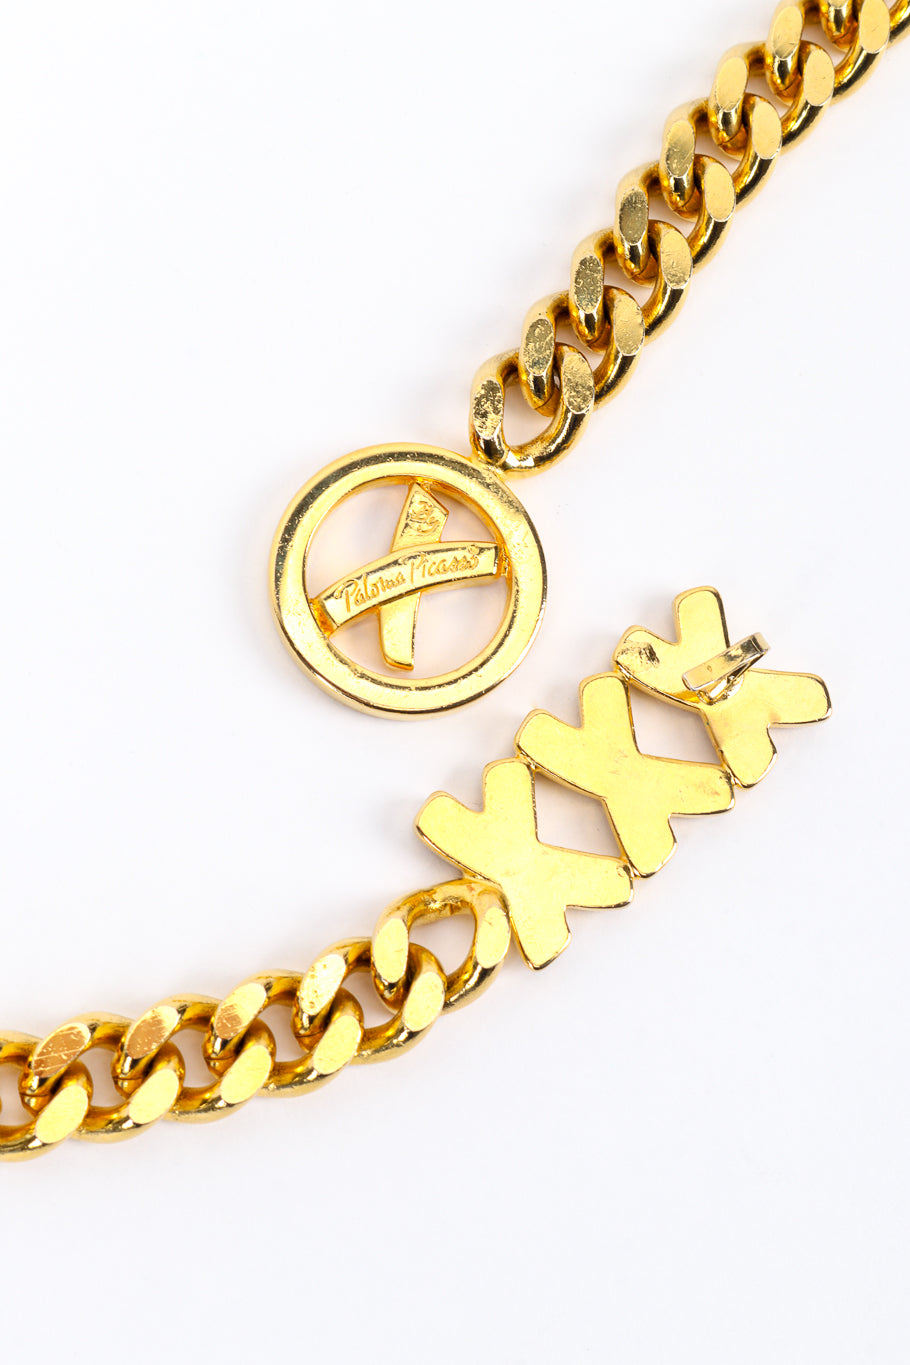 Vintage Paloma Picasso Triple X Chain Belt back of pendant with signature charm @recess la